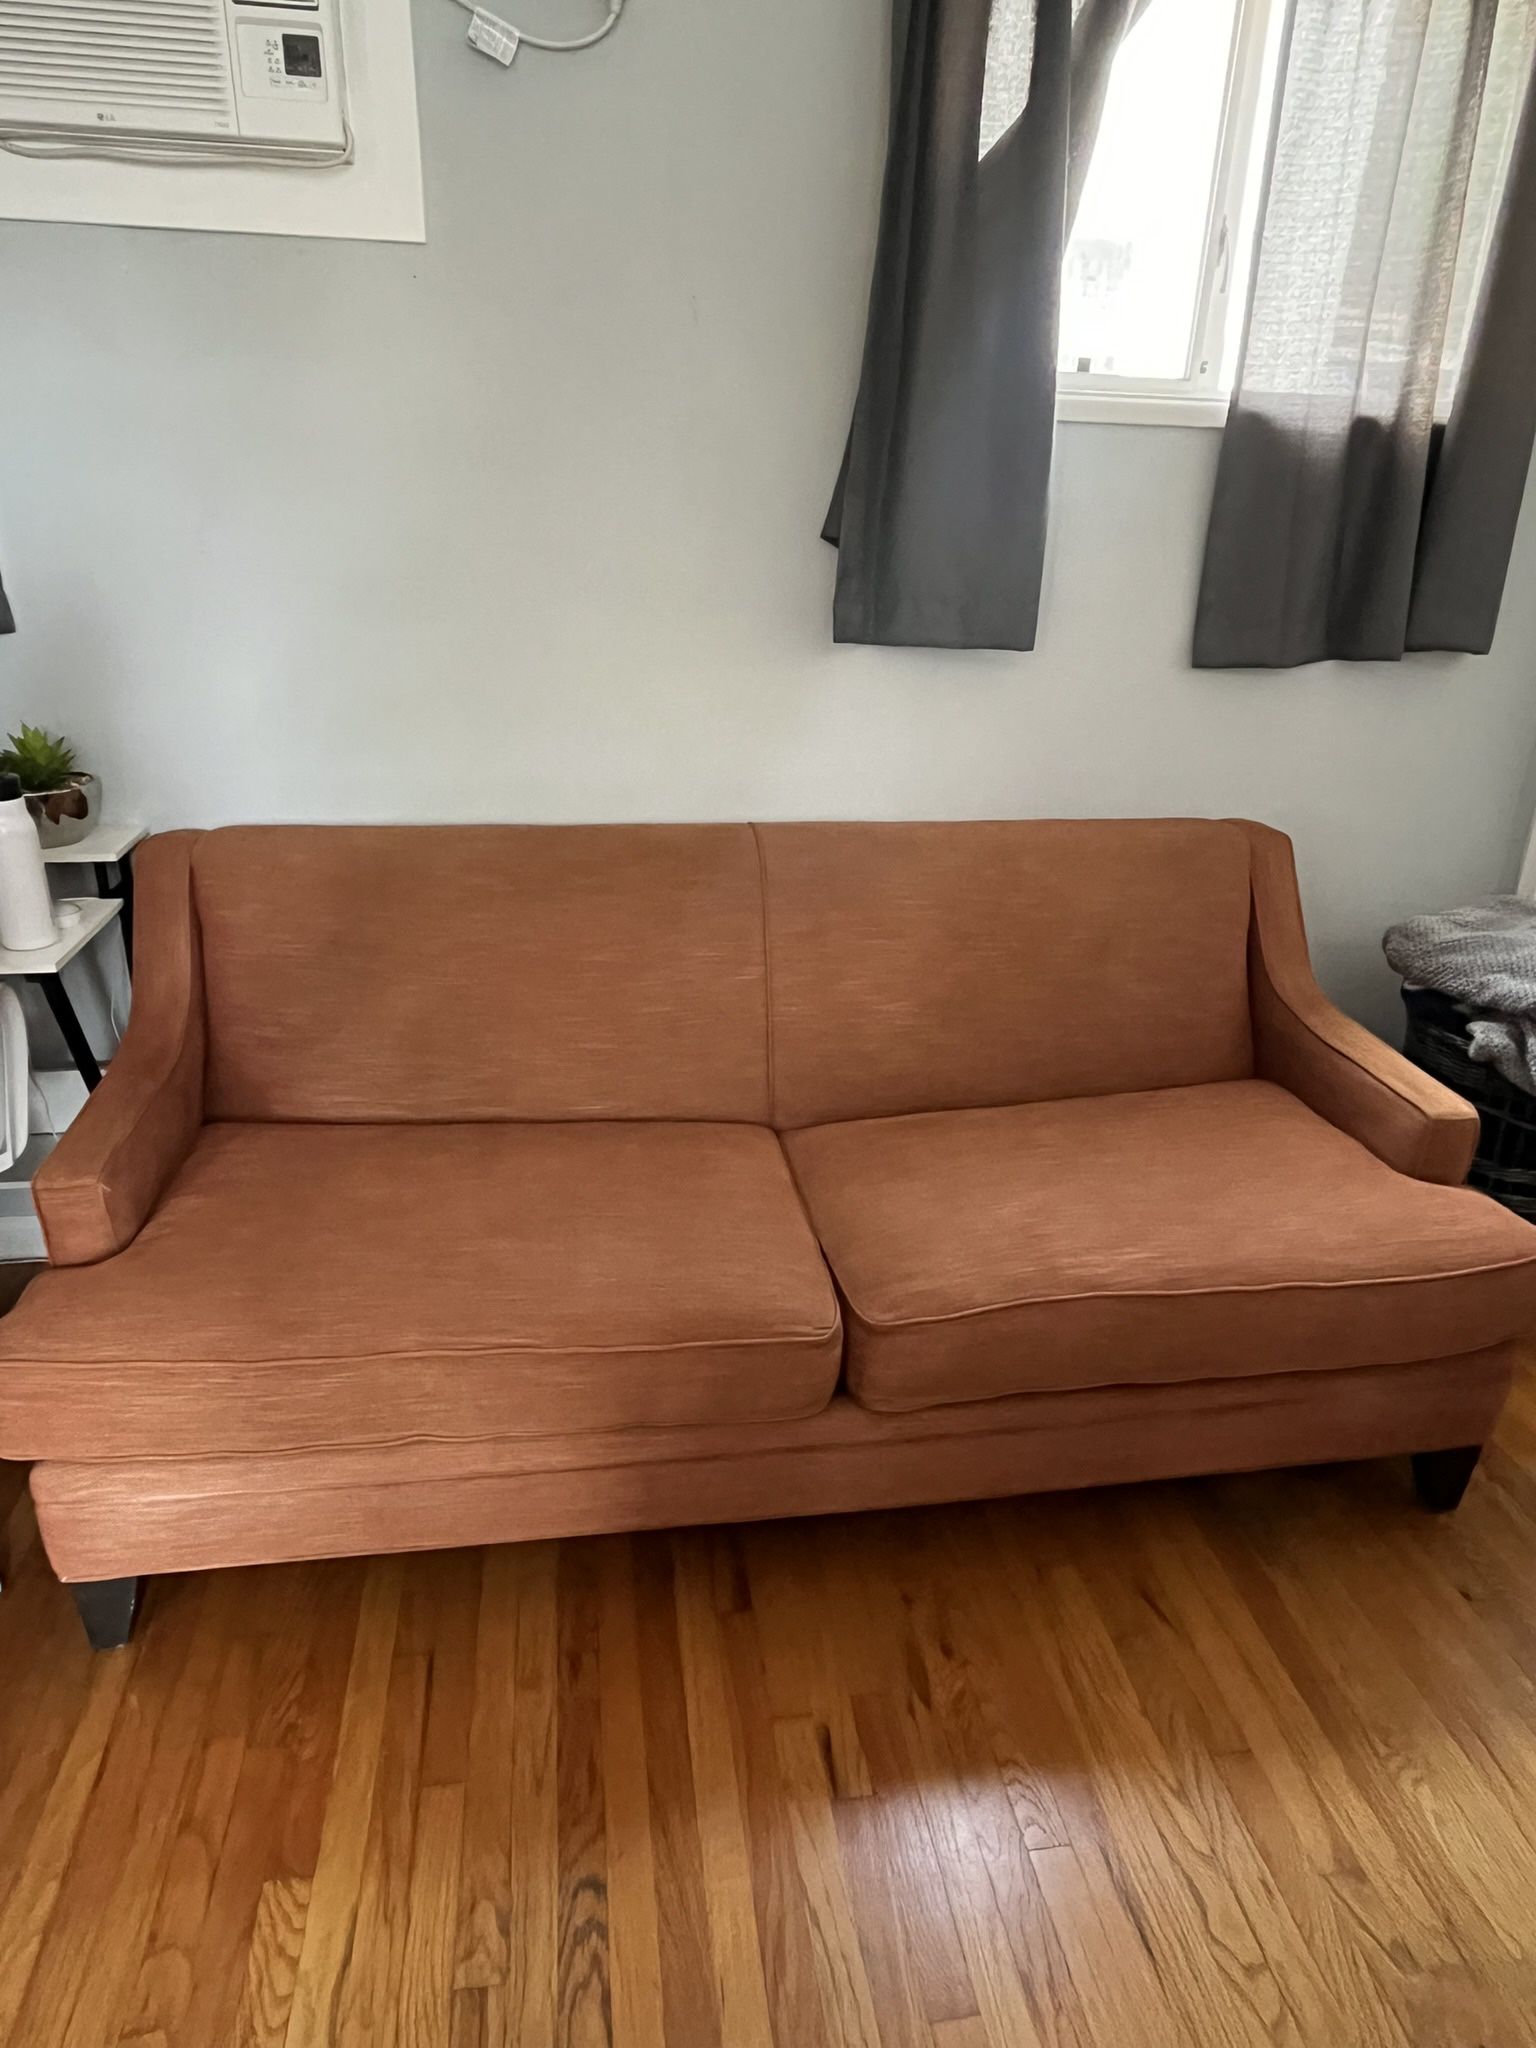 Free Orange Couch 